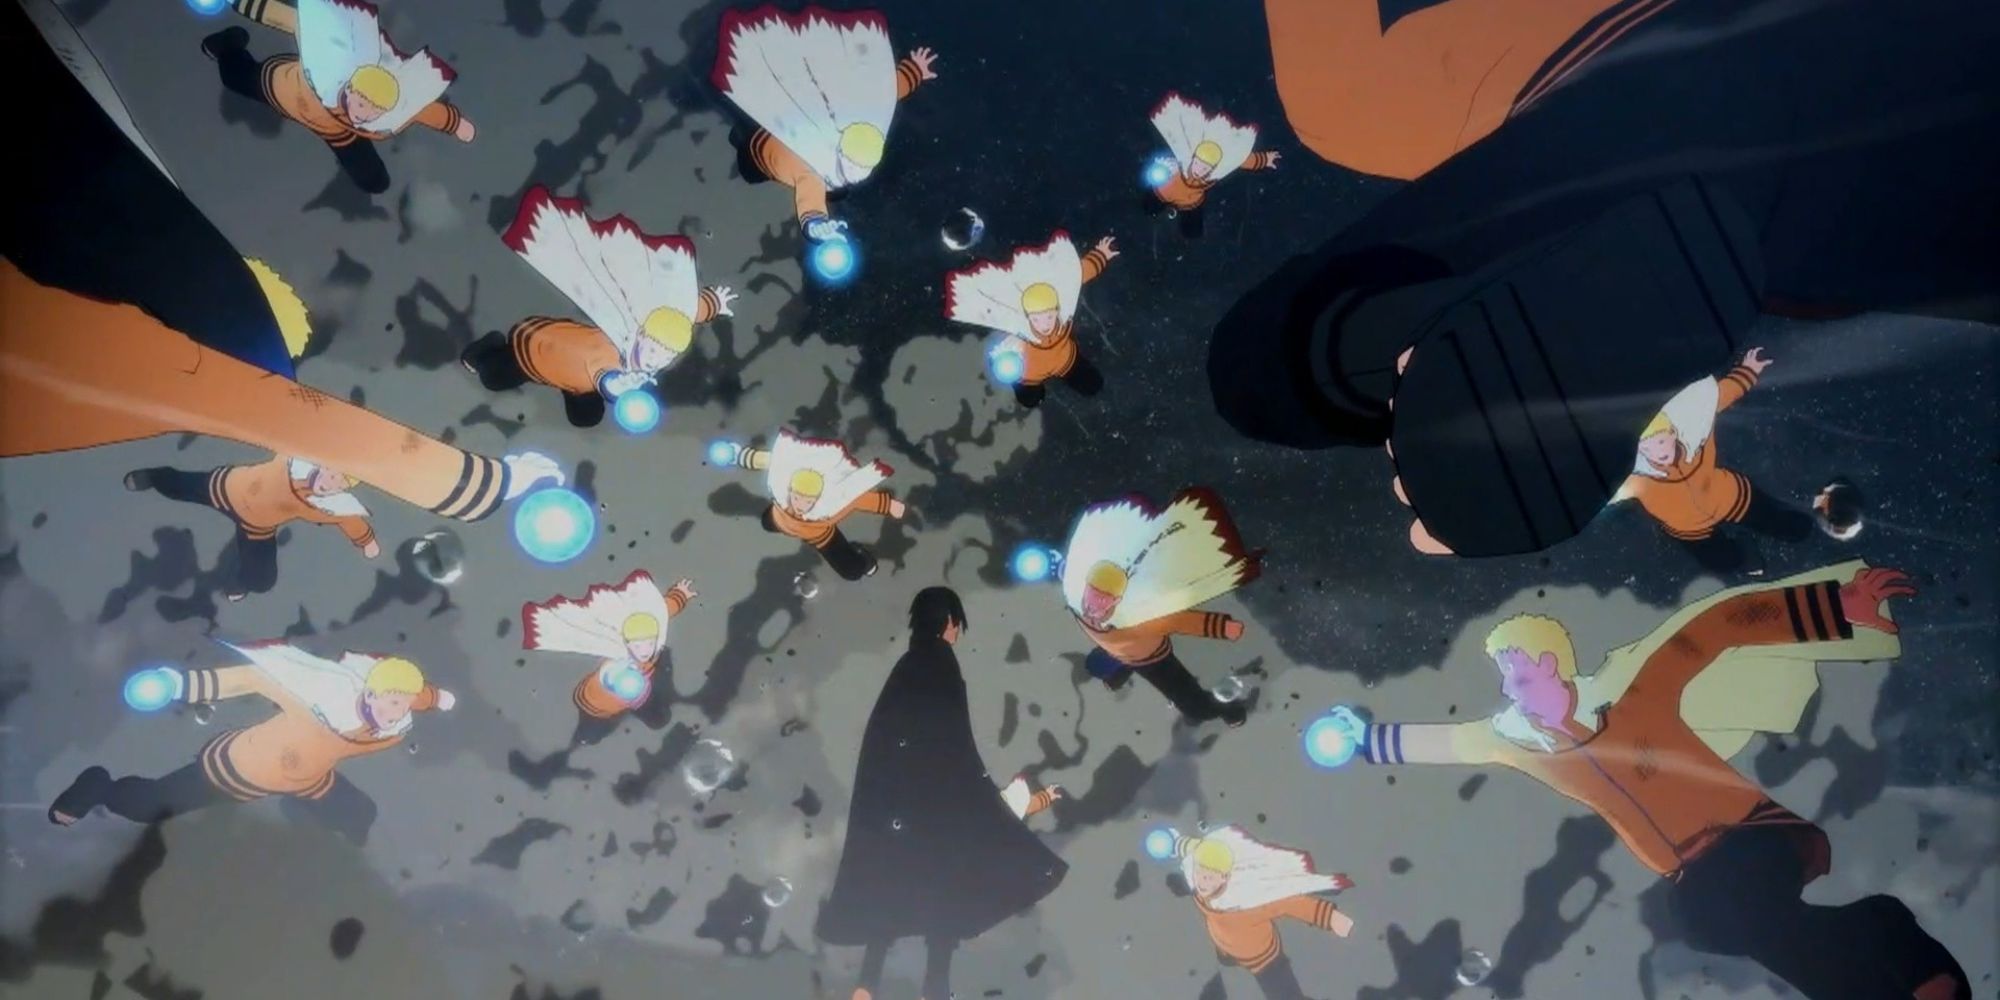 Official Naruto vs. Sasuke Trailer